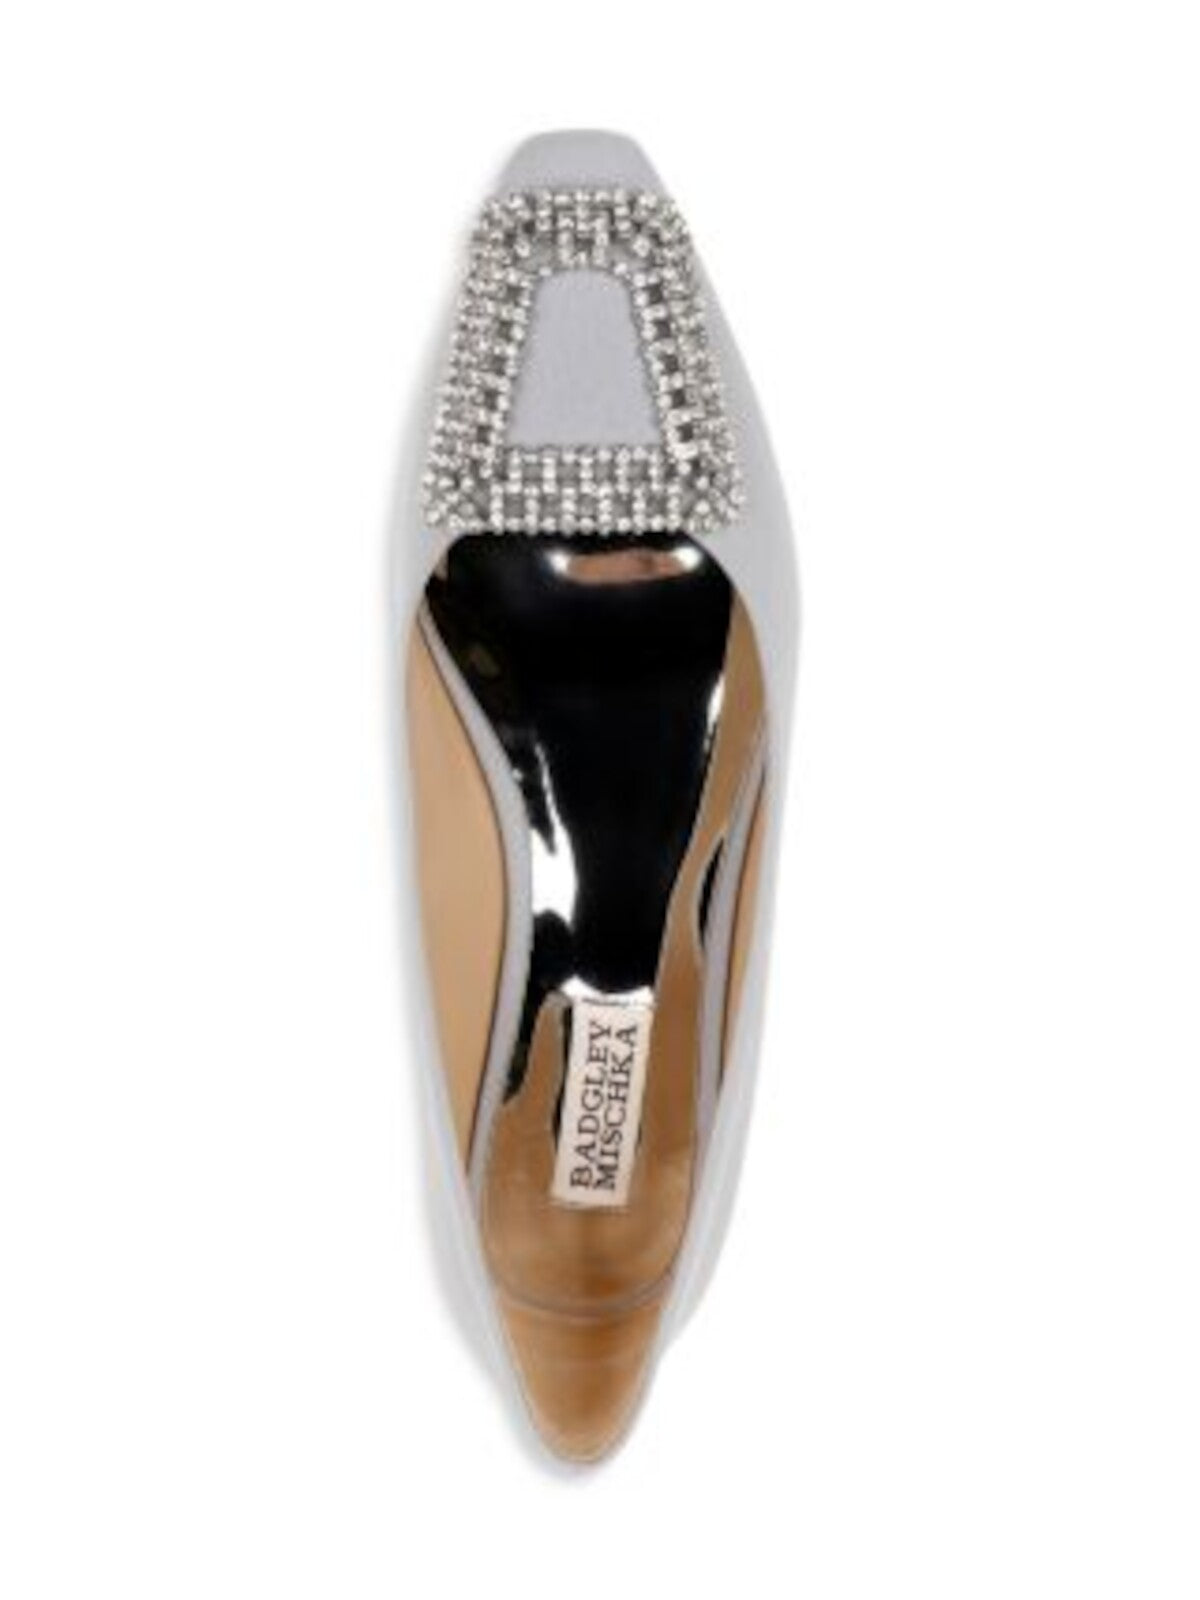 BADGLEY MISCHKA Womens Silver Embellished Hardware Rhinestone Padded Emerie Pointed Toe Slip On Flats Shoes 9